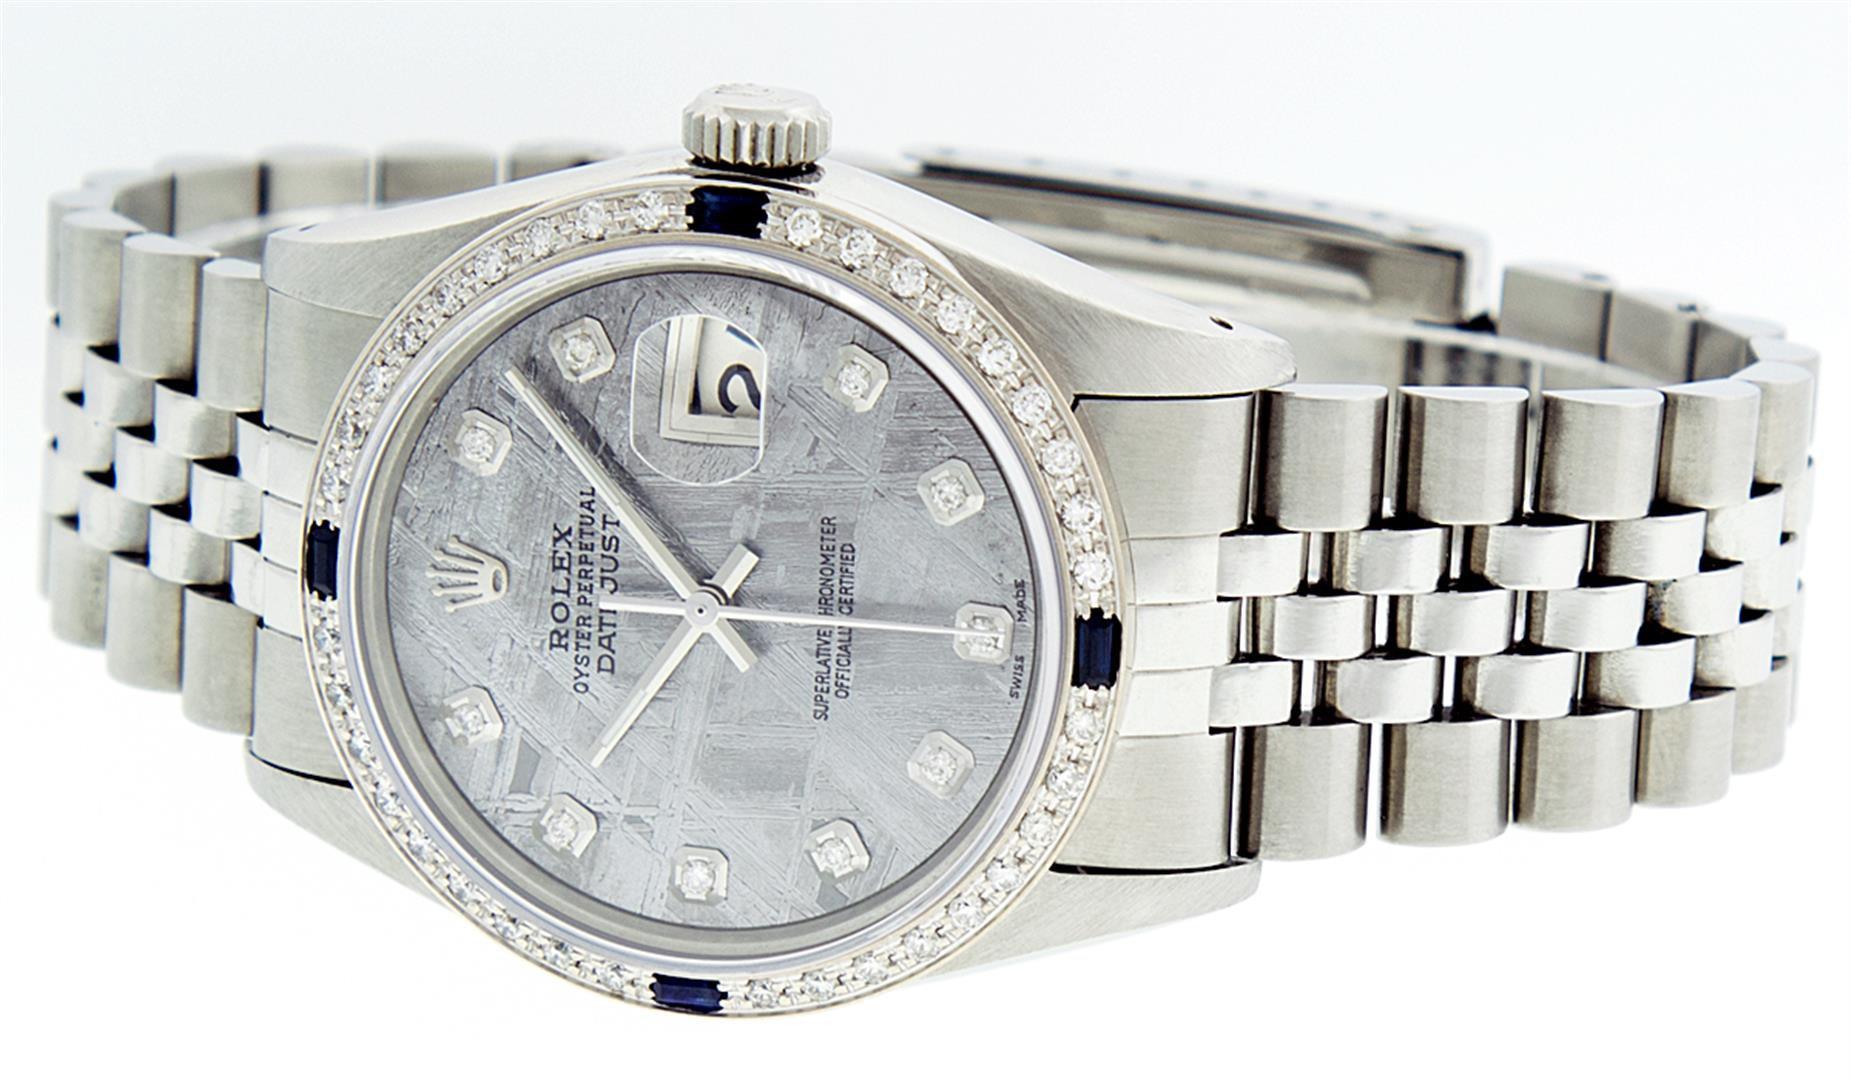 Rolex Stainless Steel Meteorite Diamond Sapphire DateJust Men's Watch